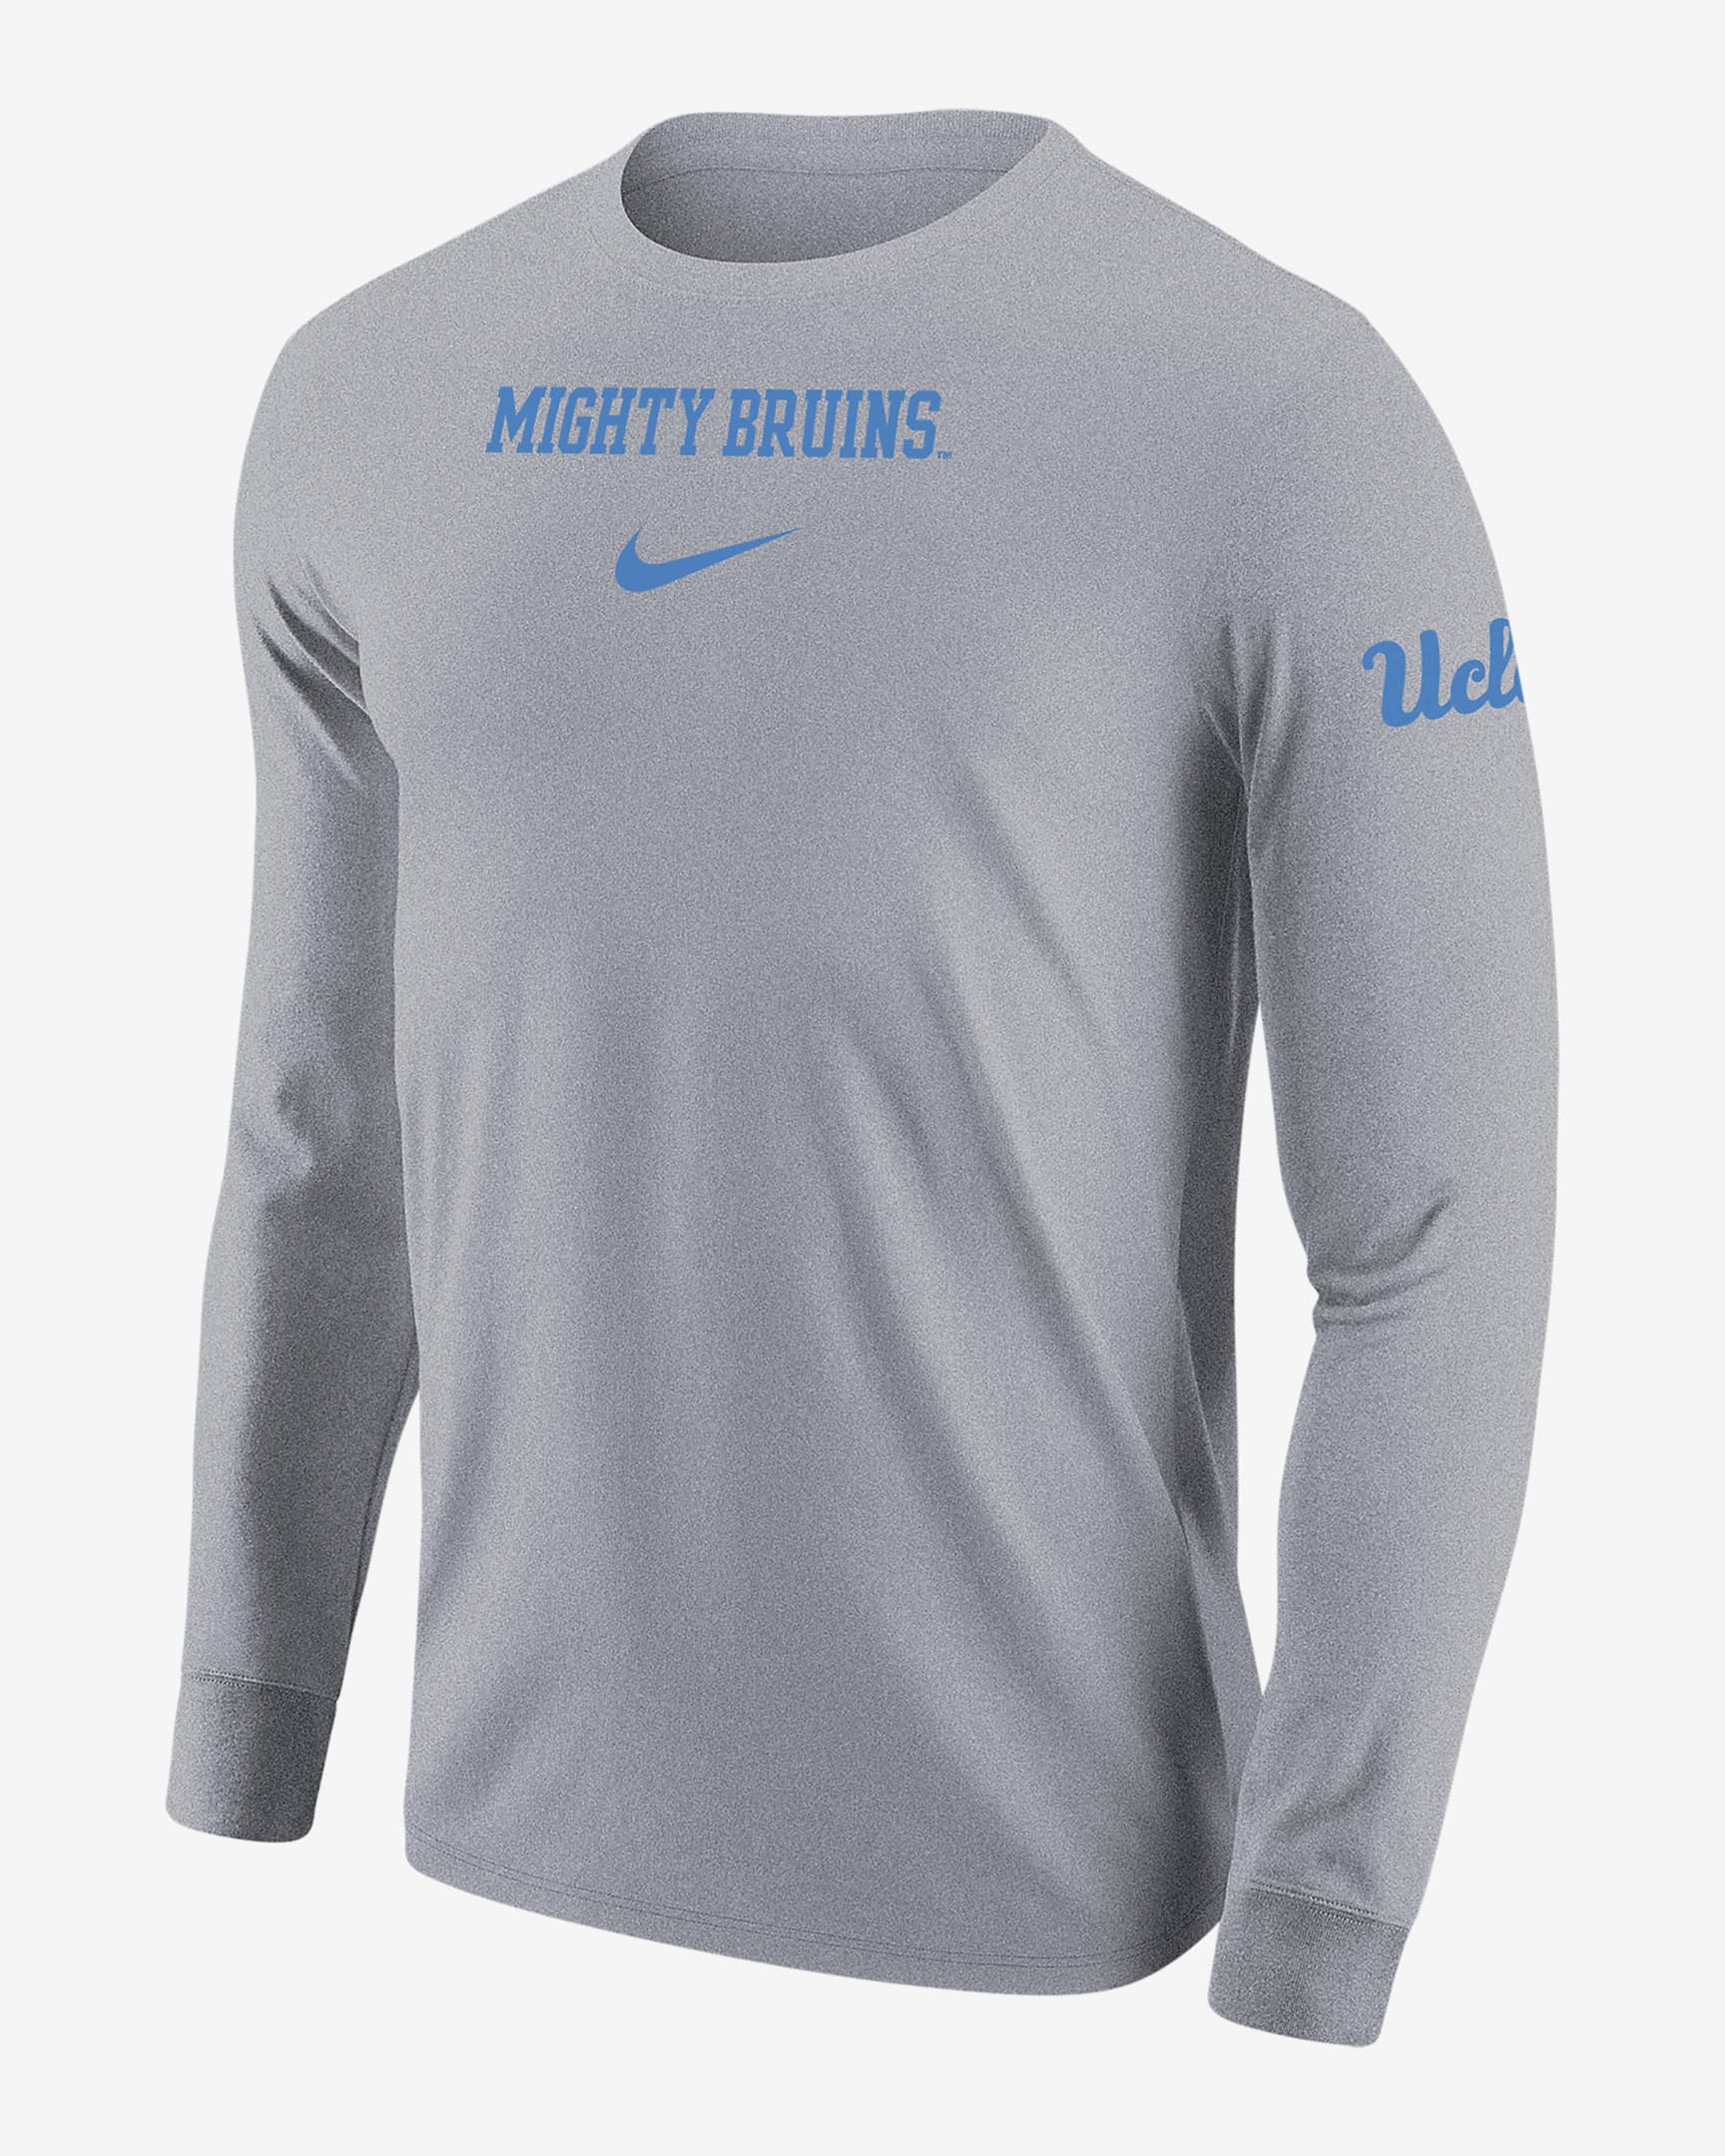 UCLA Men's Nike College Long-Sleeve T-Shirt. Nike.com